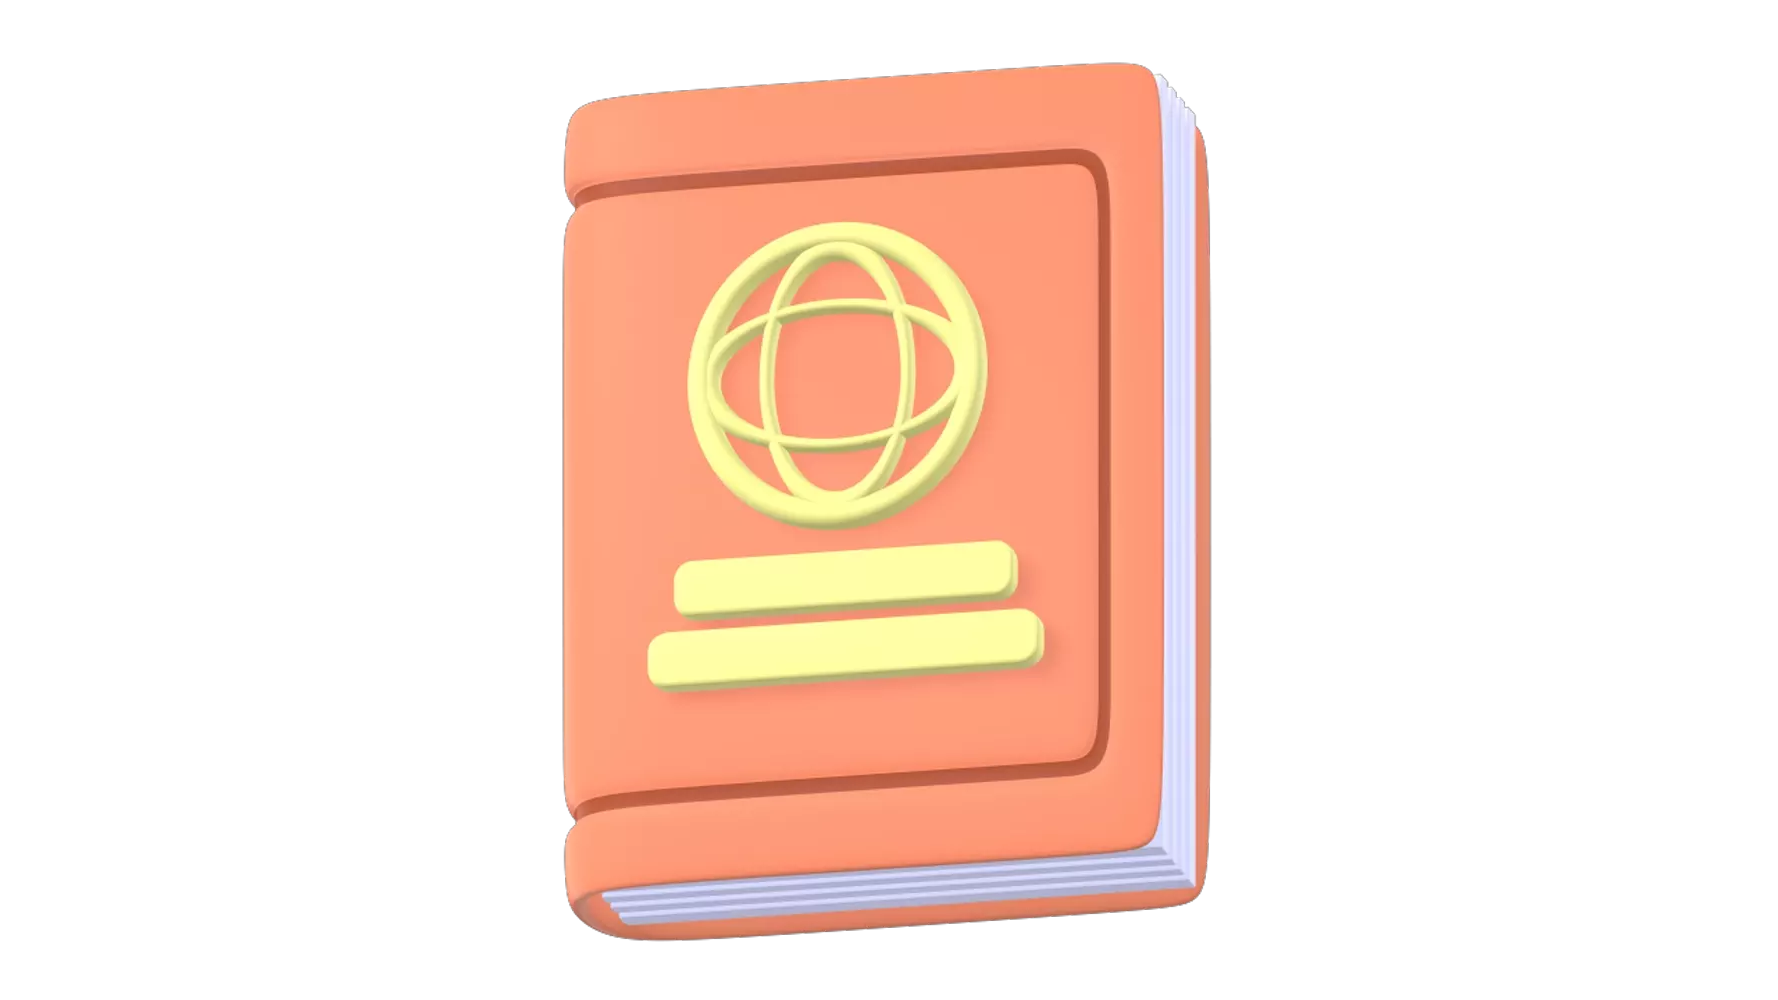 Passport 3D Graphic